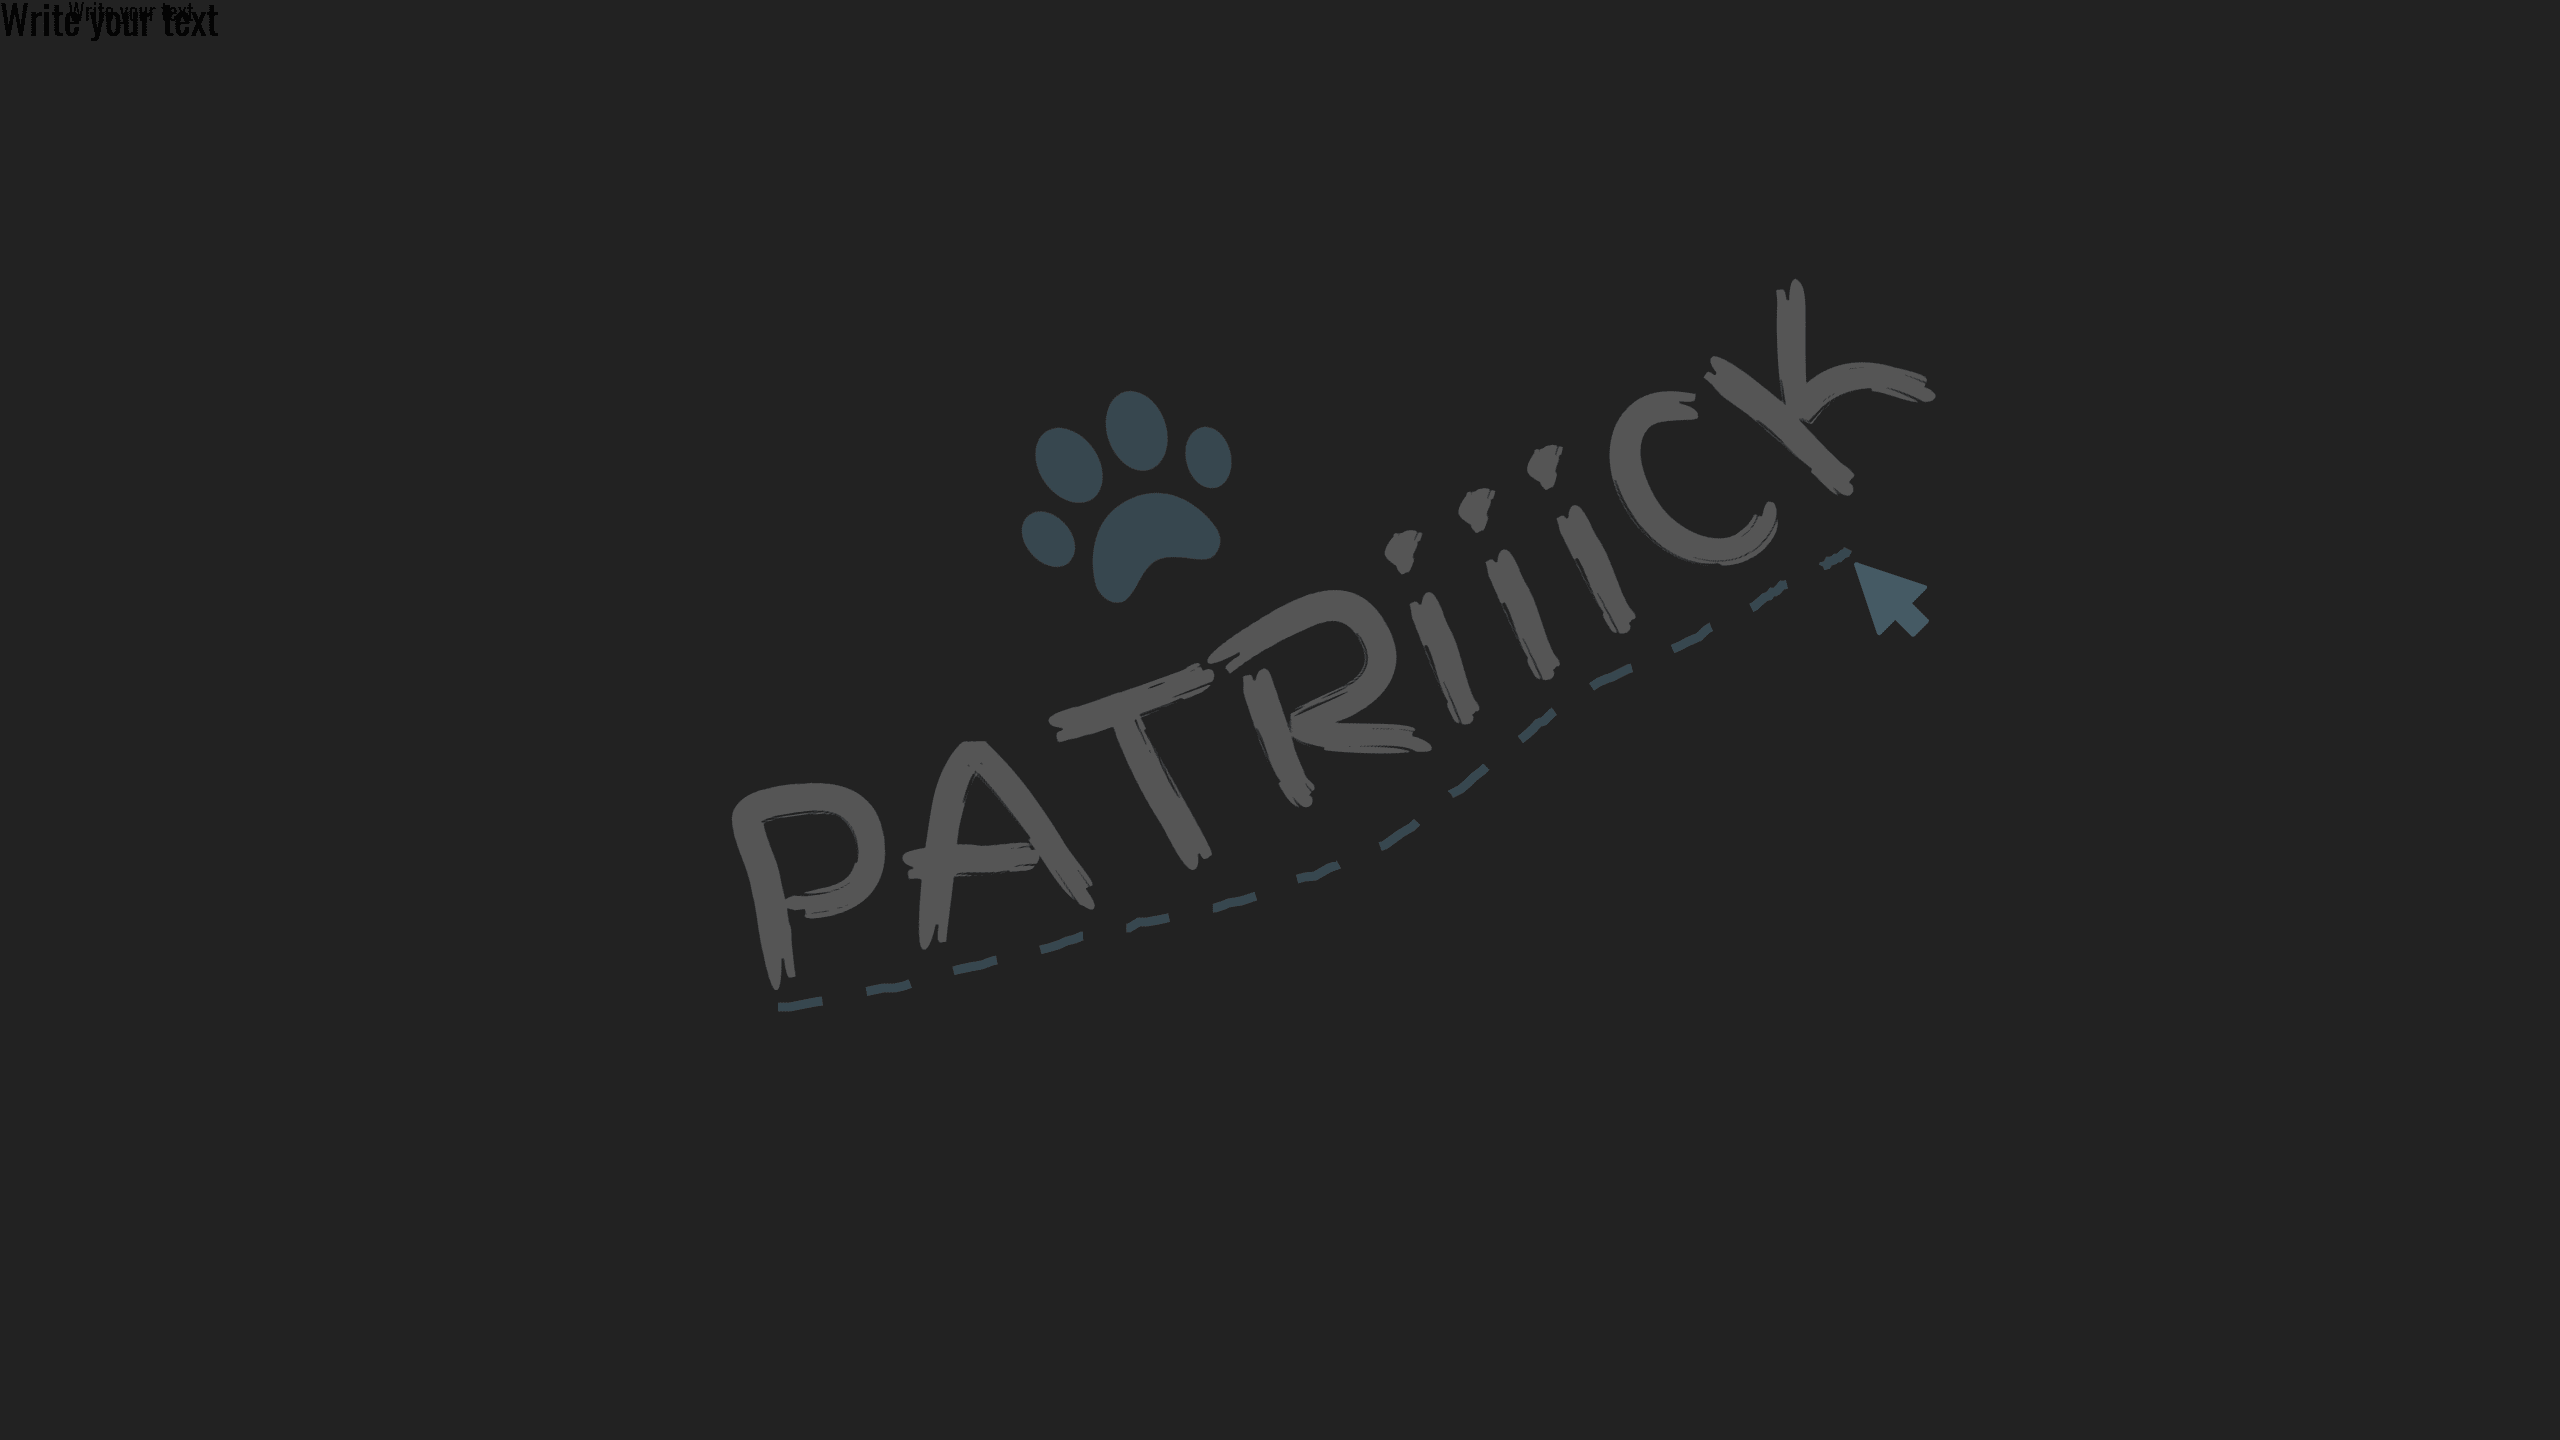 Patrick 1 Design 